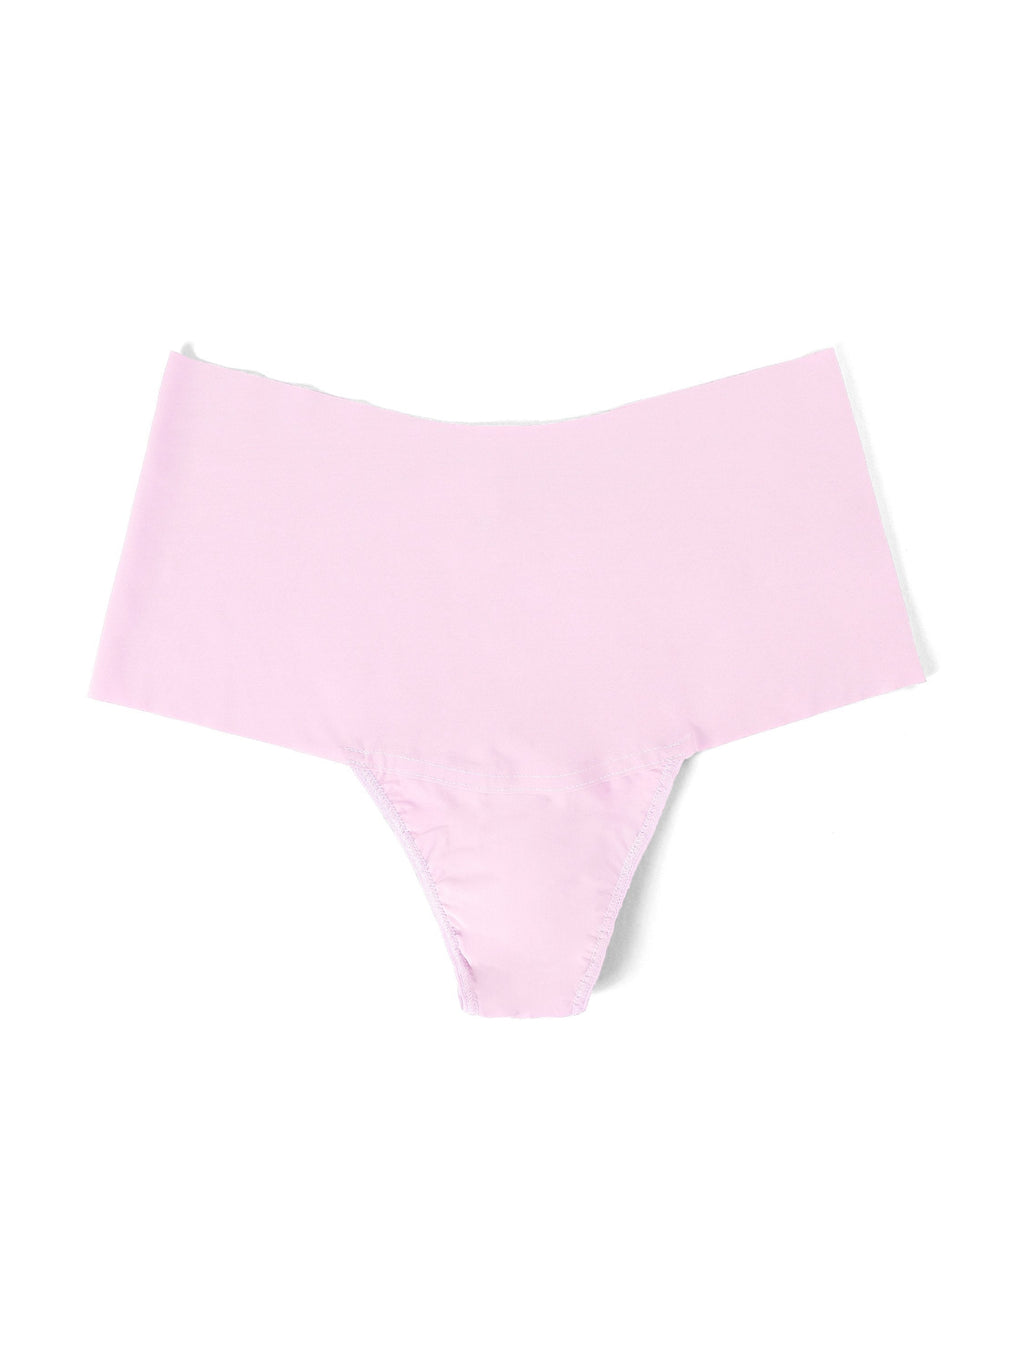 2 PINK VS Cheekster Panties M L  Vs pink, Cheekster, Victoria secret pink